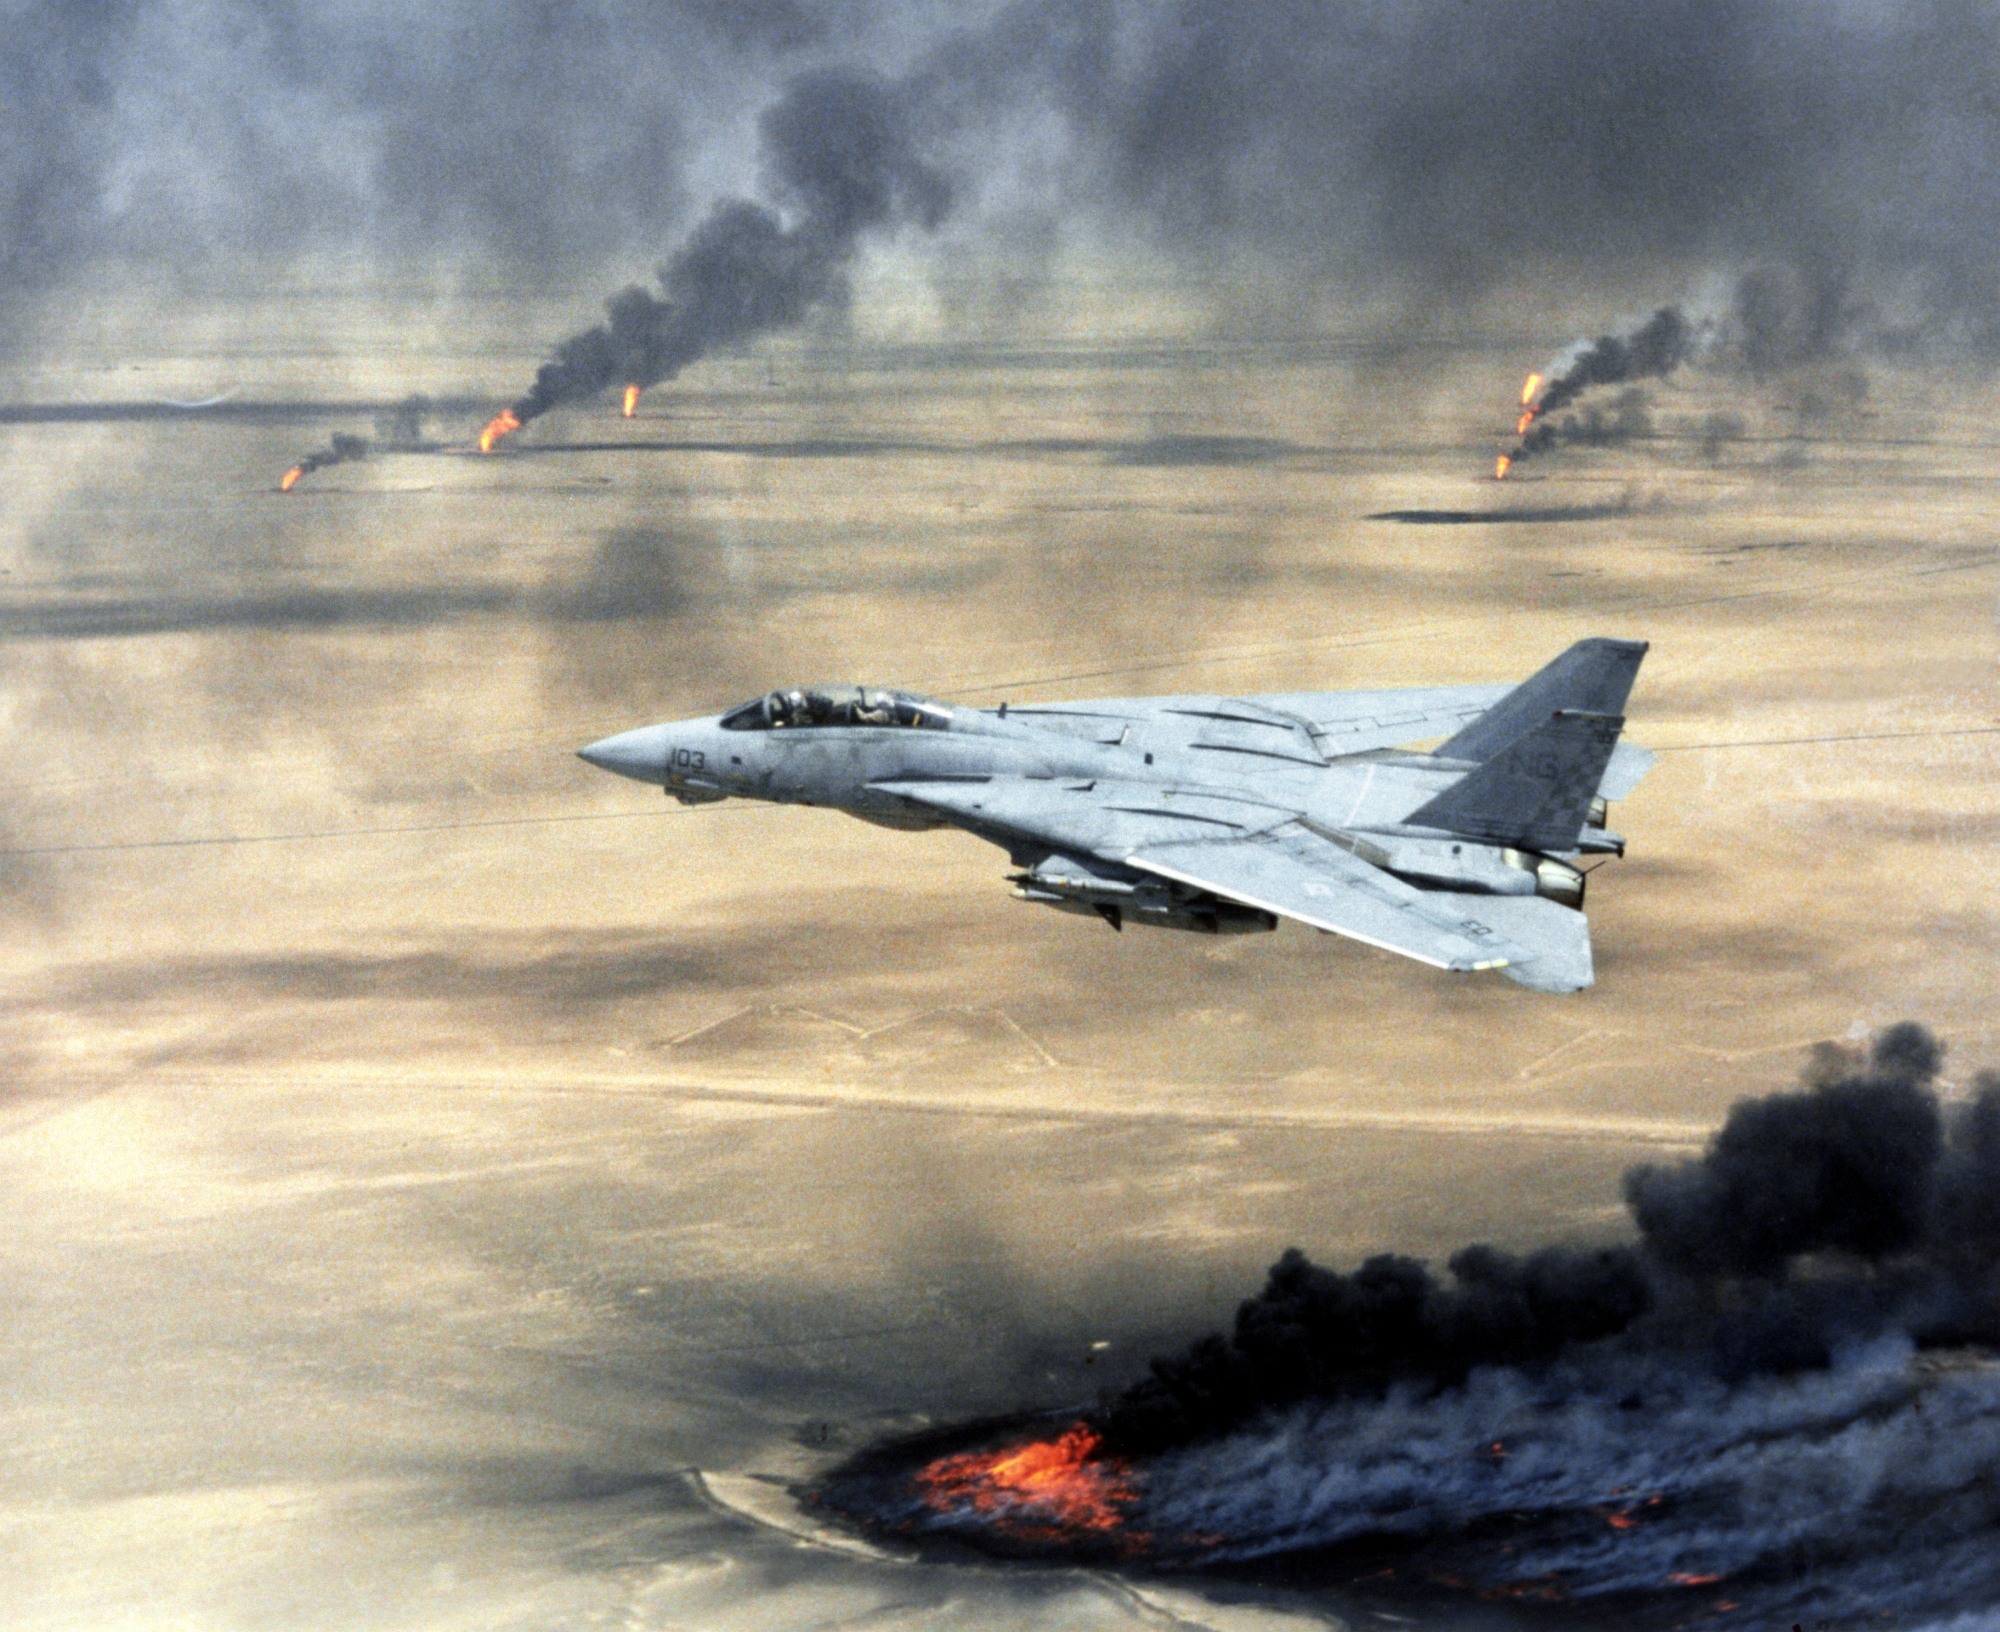 http://chamorrobible.org/images/photos/gpw-20060914-UnitedStatesNavy-DN-SC-04-15221-burning-oil-wells-F-14A-Tomcat-Operation-Desert-Storm-Kuwait-19910201-medium.jpg